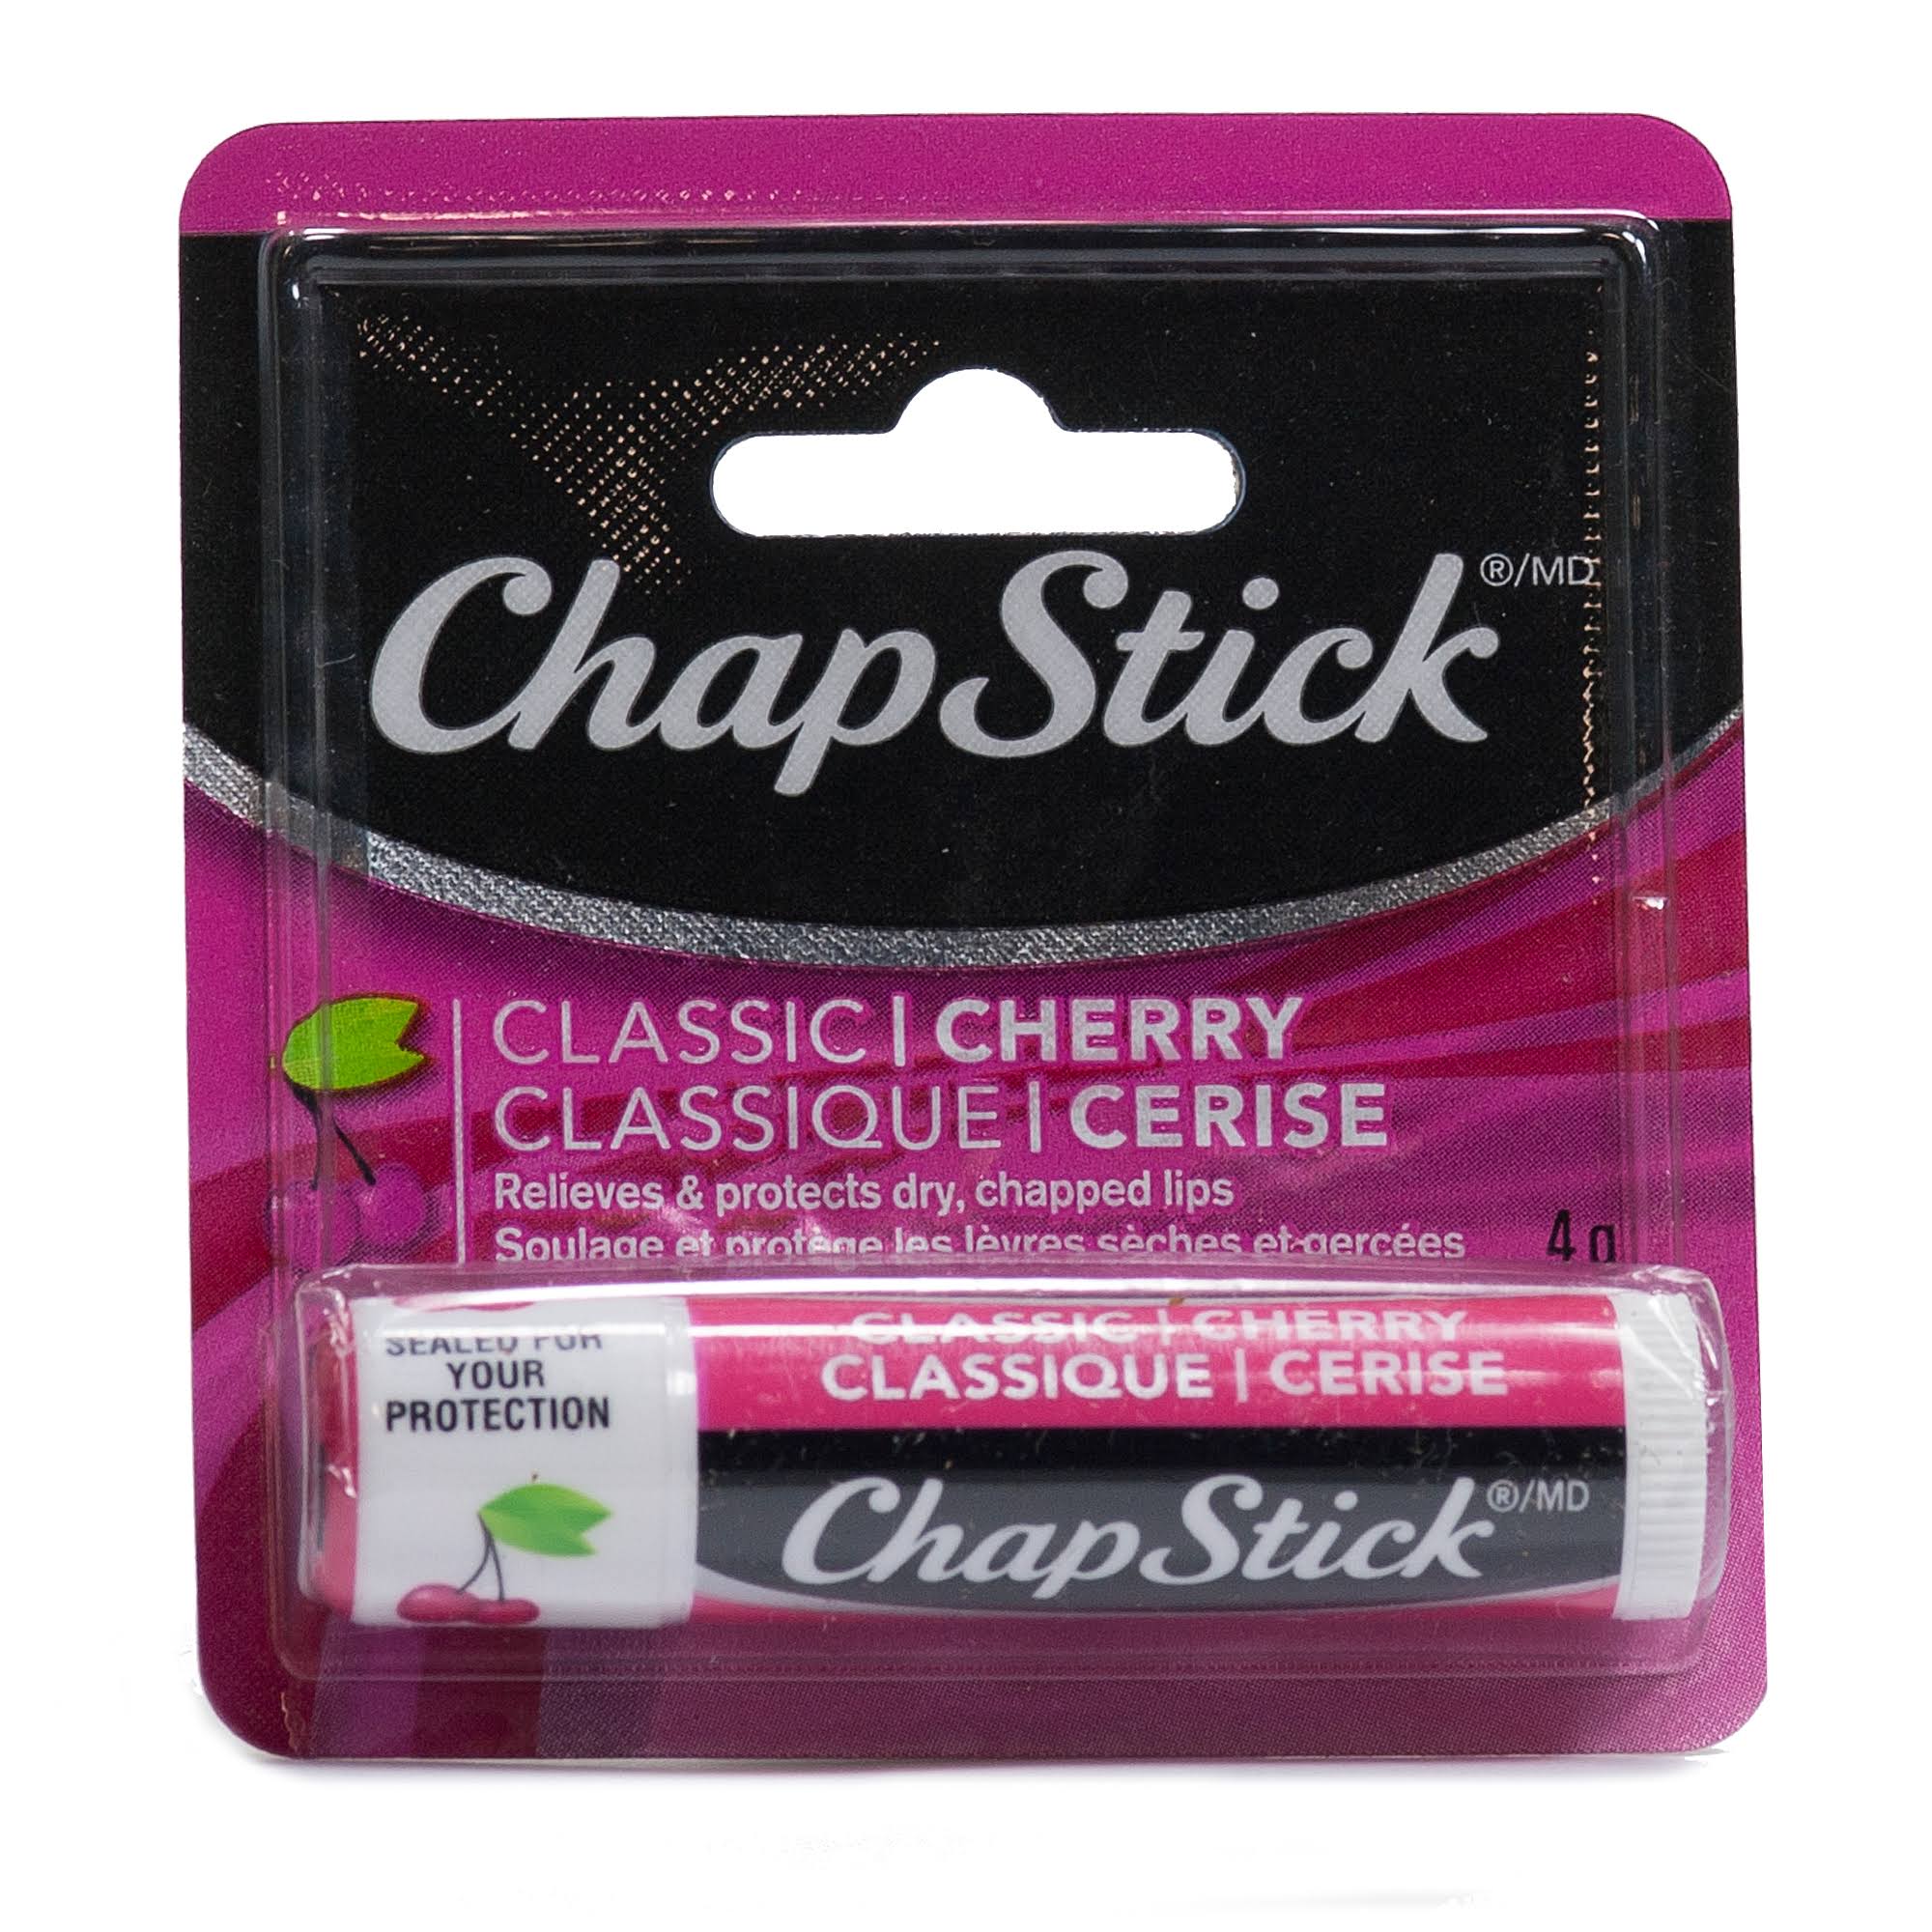 Chap Stick Lip Balm - Classic Cherry, 4g